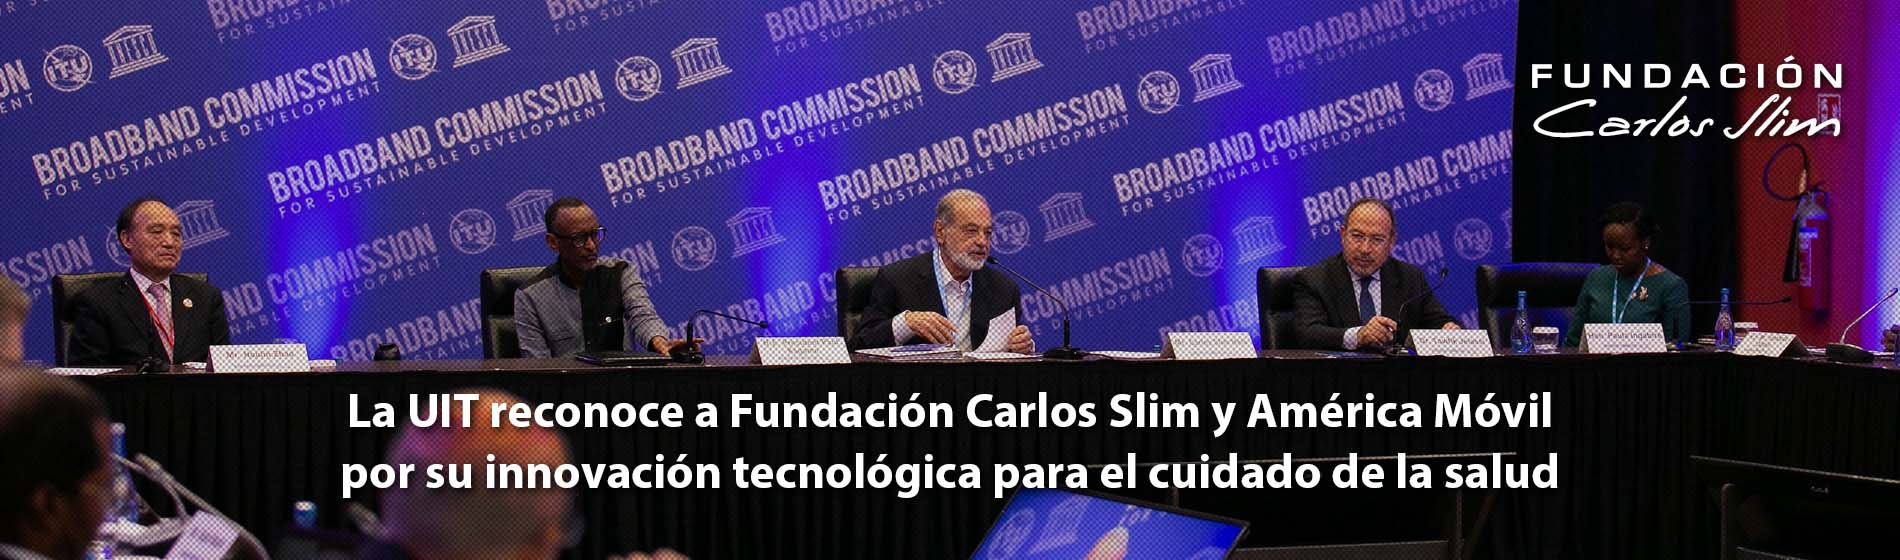 Fundacion Carlos Slim Premio WSIS